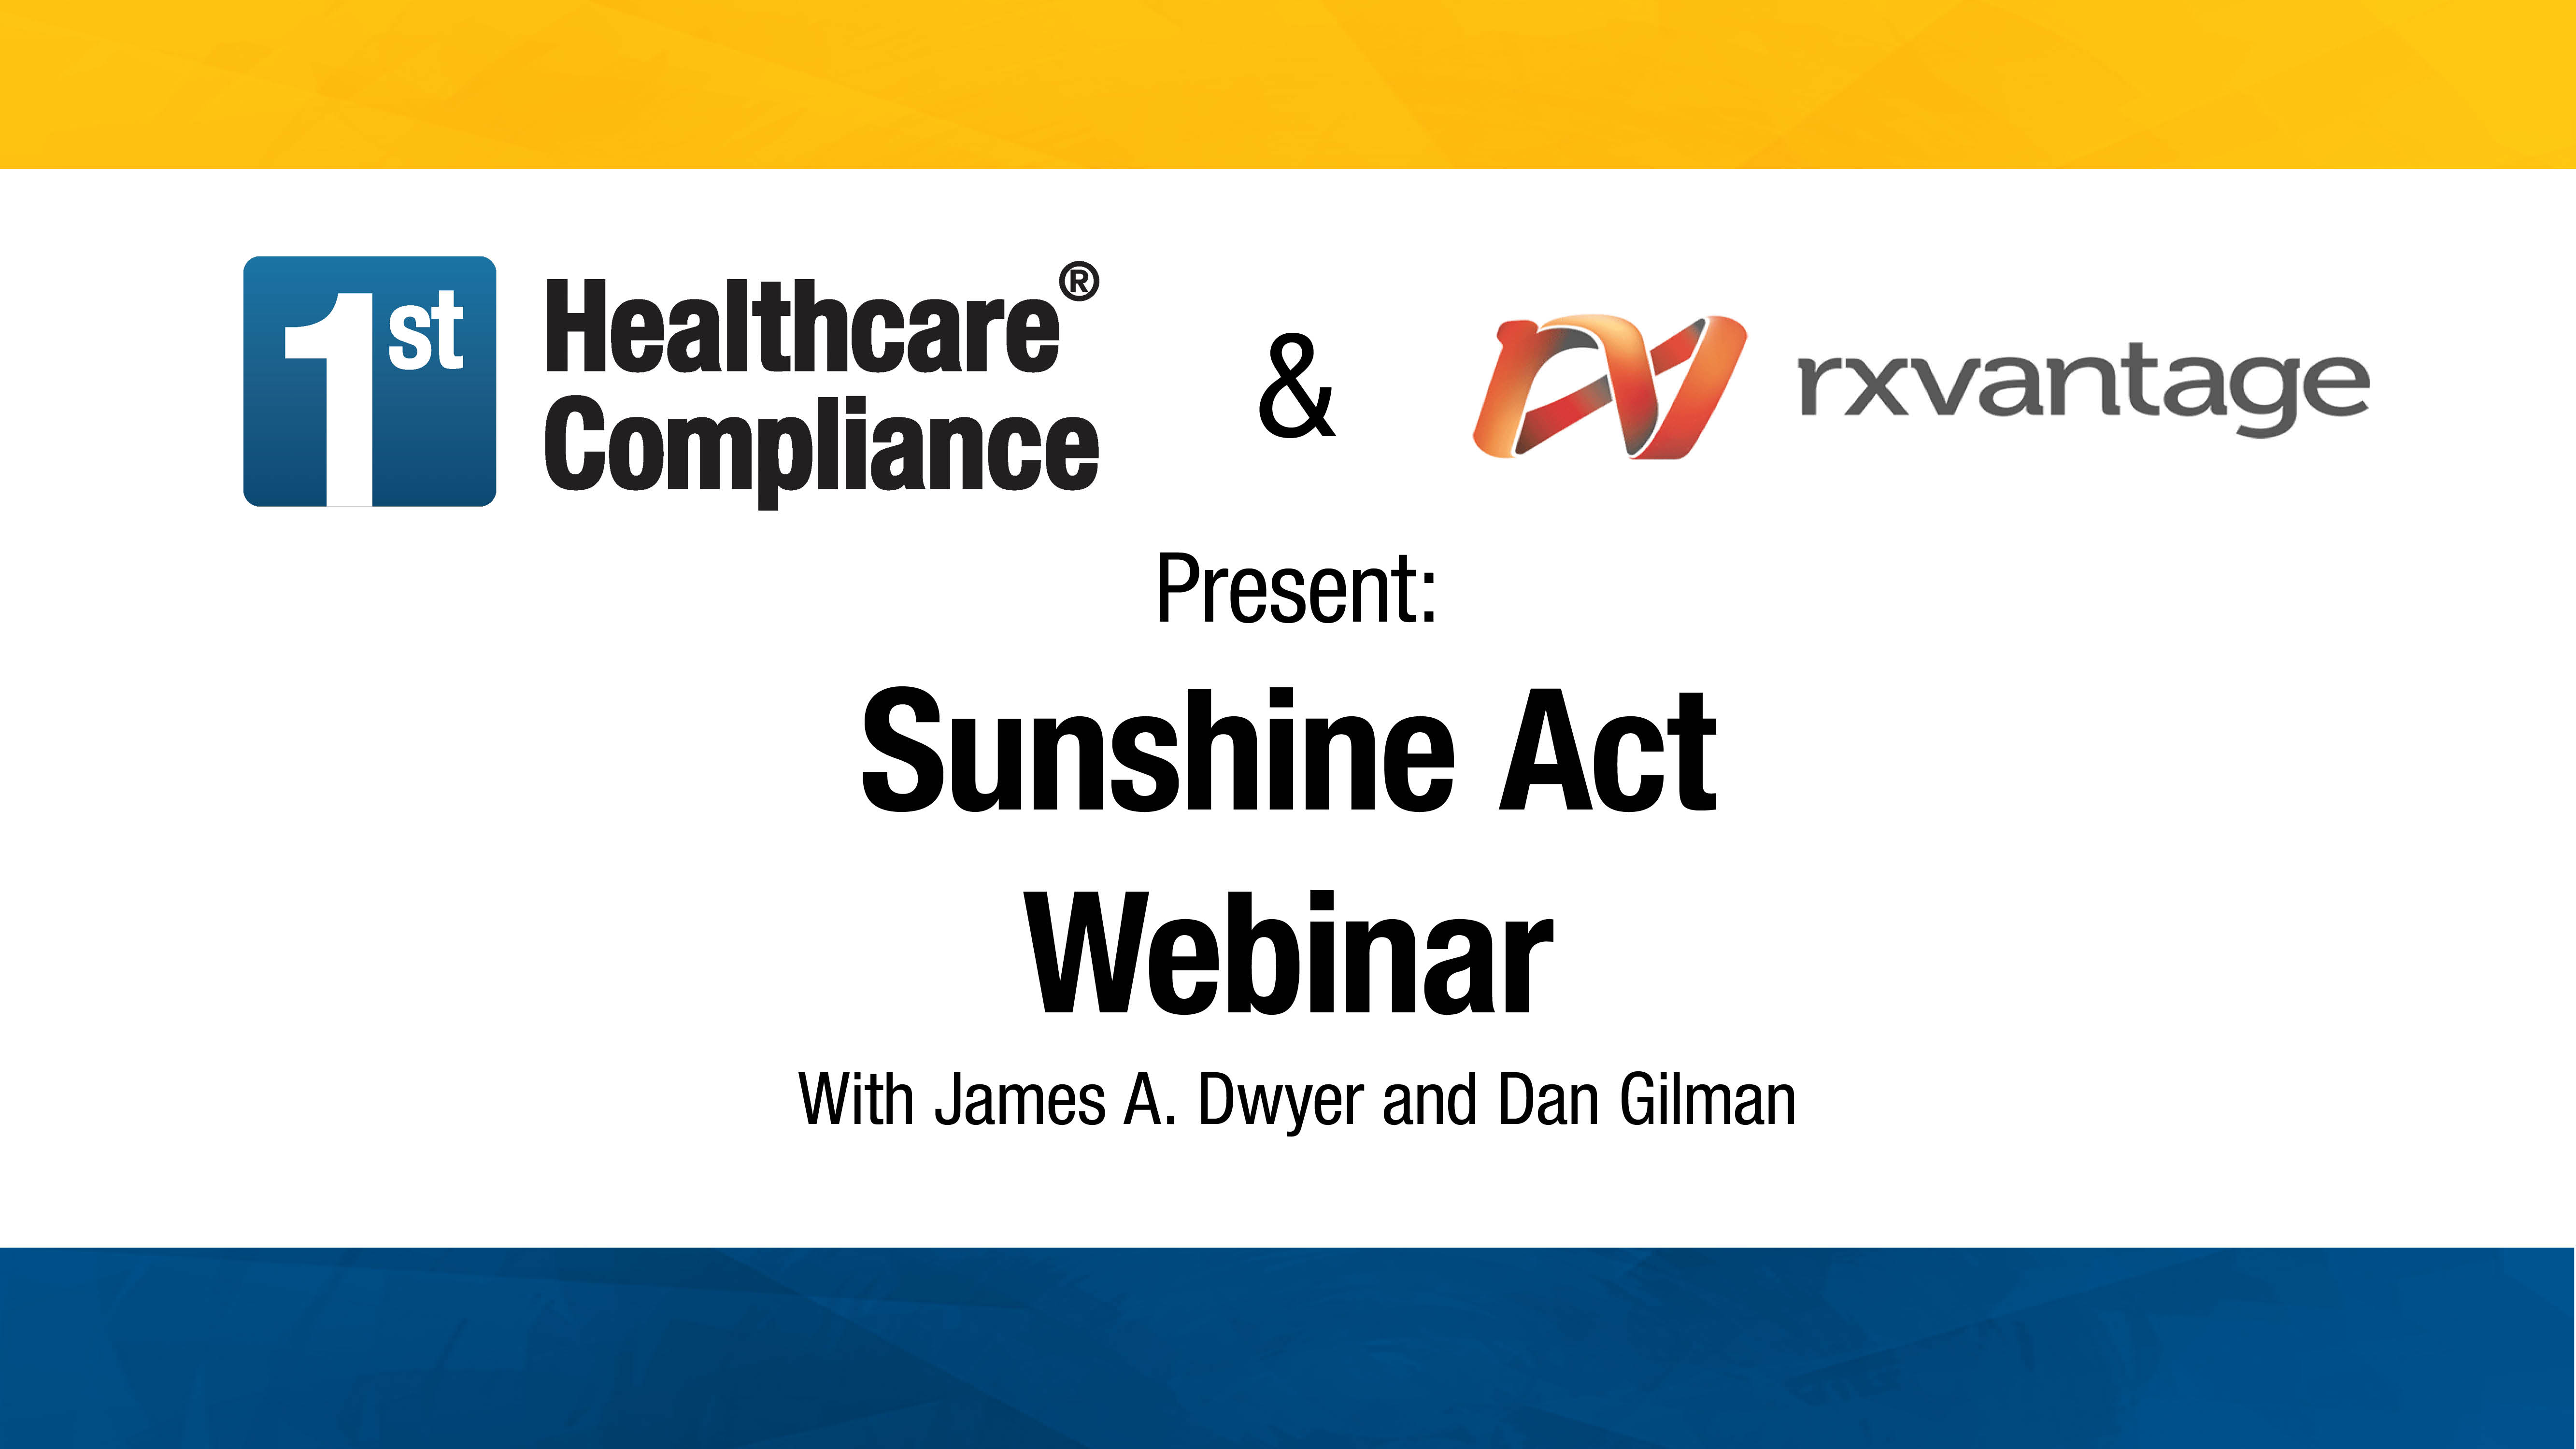 Sunshine Act Webinar First Healthcare Compliance